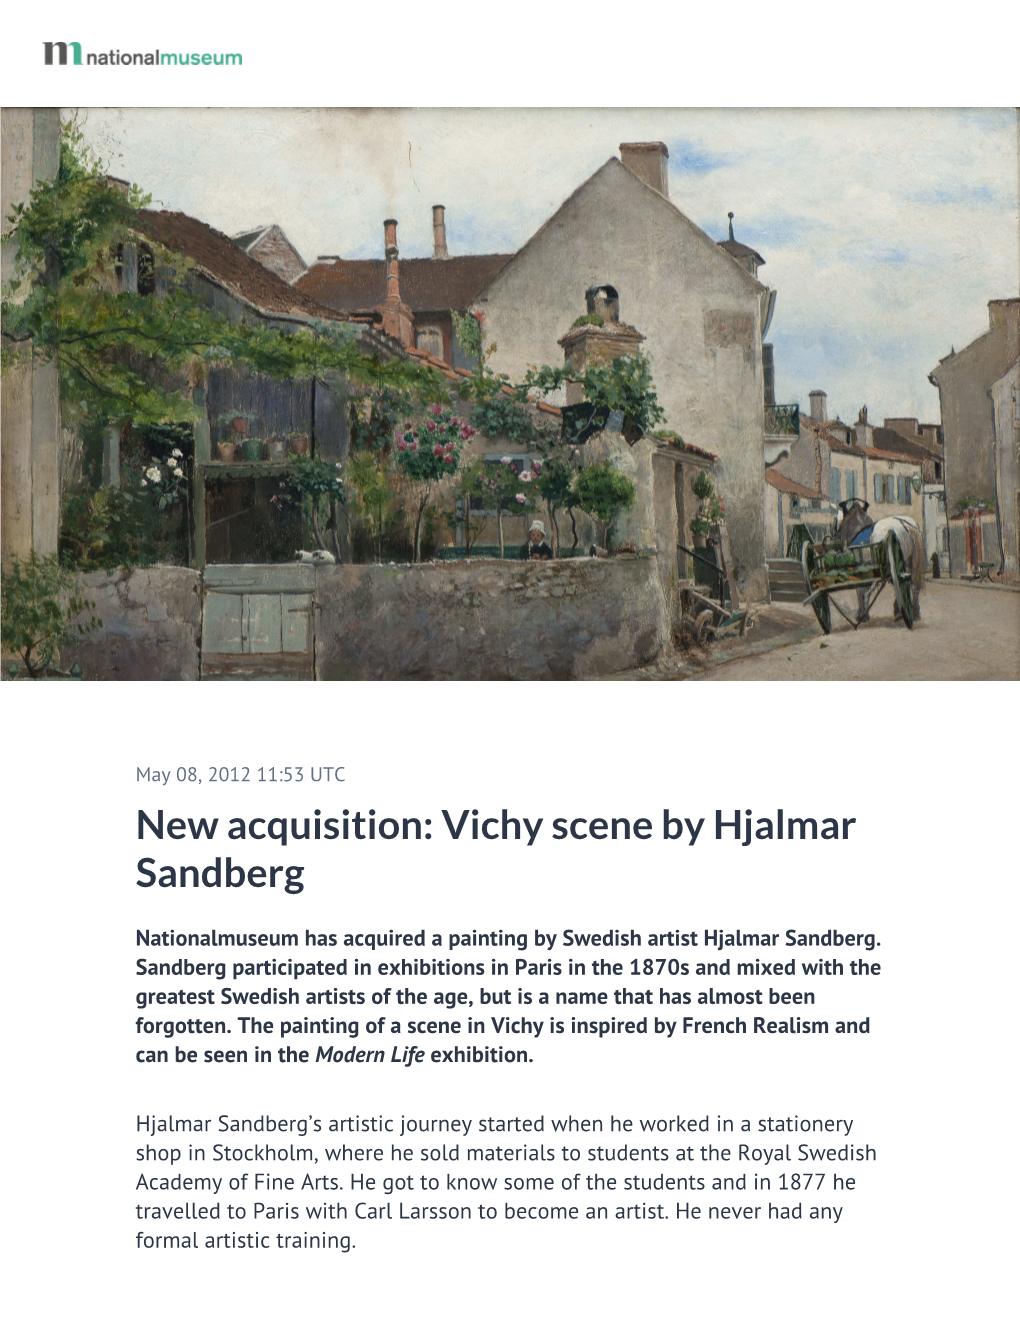 New Acquisition: Vichy Scene by Hjalmar Sandberg